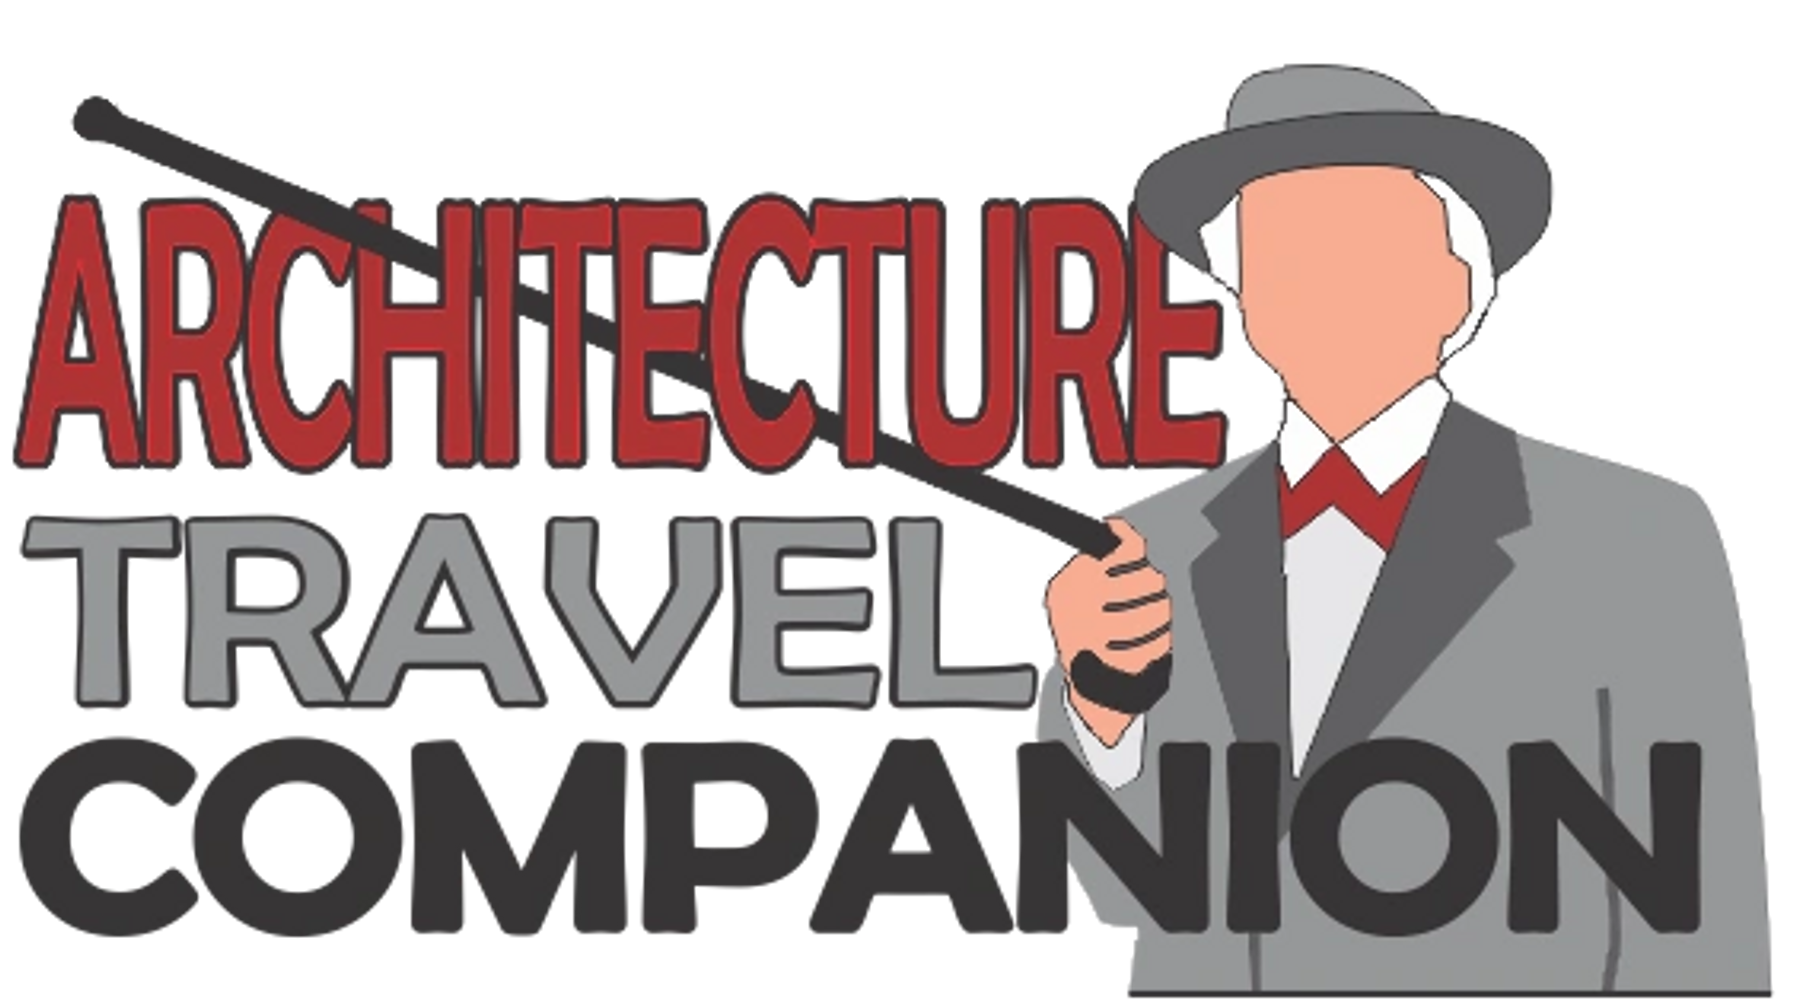 Frank Lloyd Wright - Architecture Travel Companion, LLC